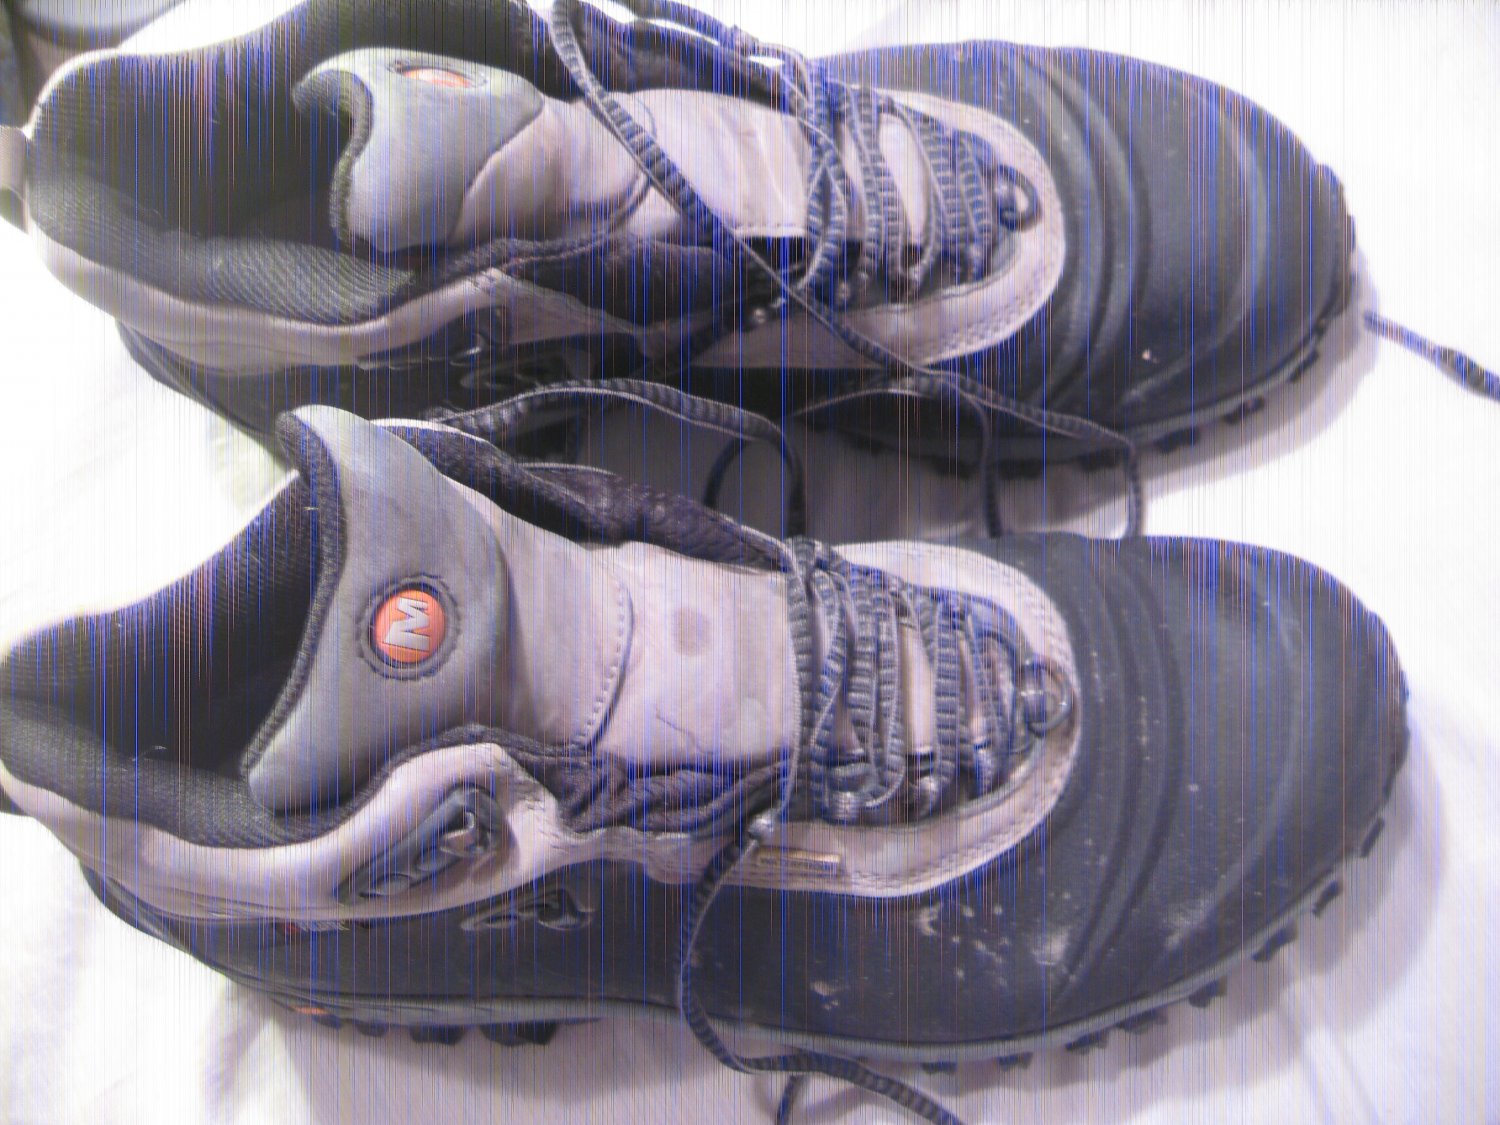 Merrell Continuum Hiking Cave Shoes Polartec WaterProof sz 11 slight use